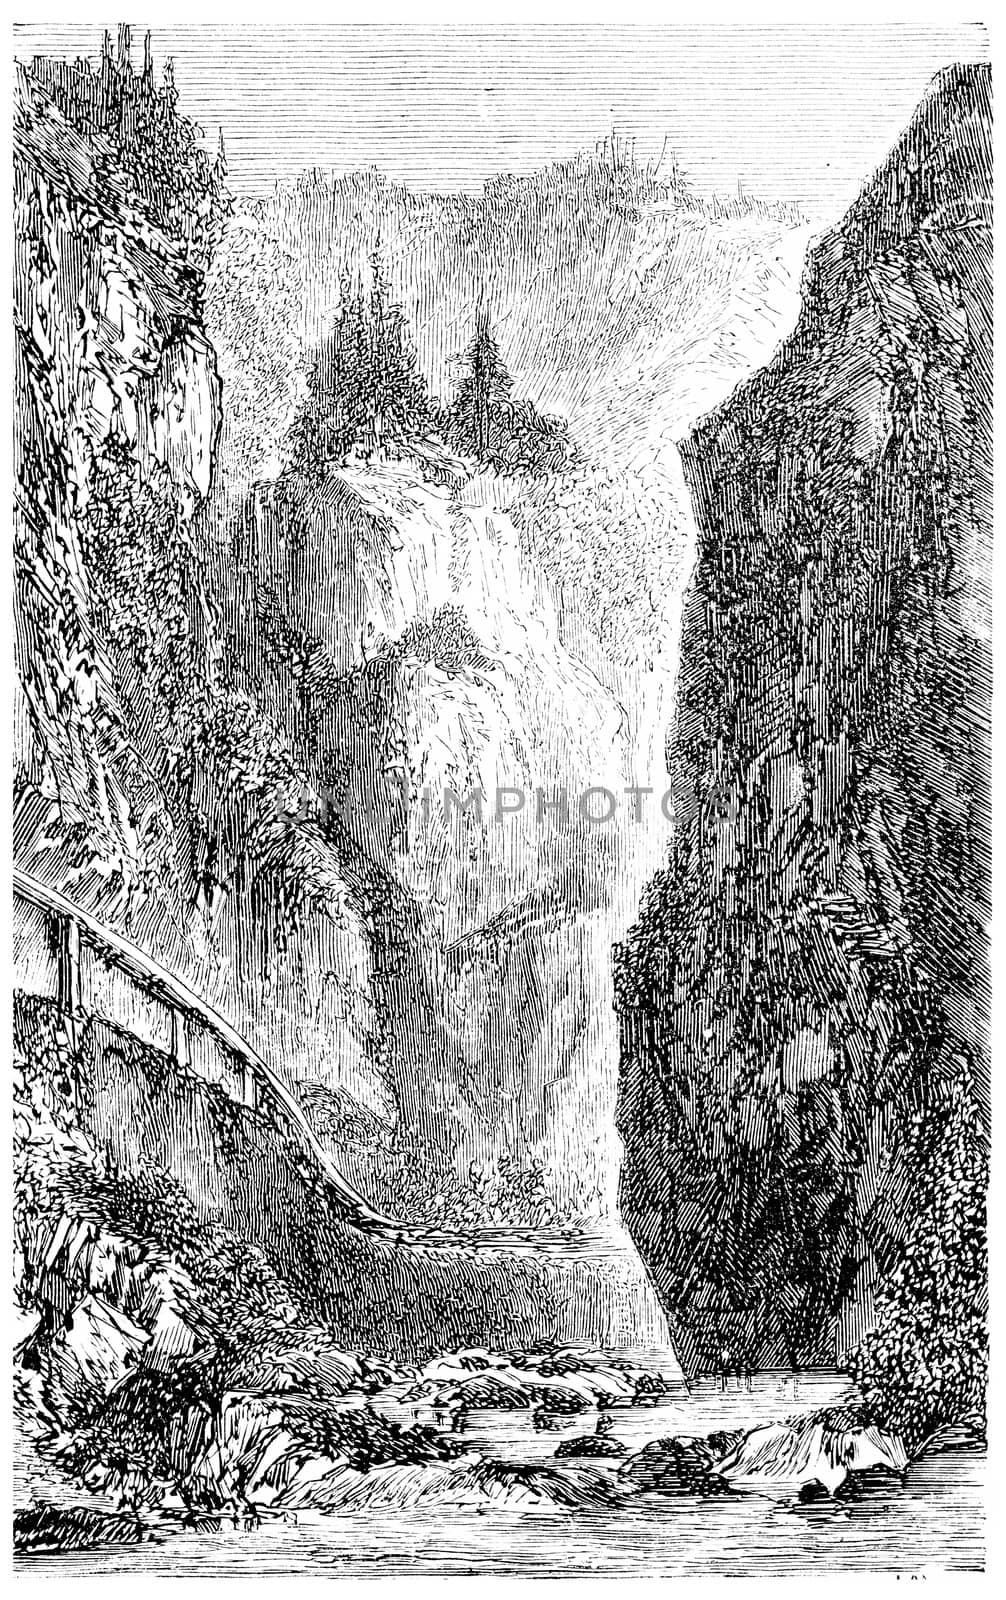 Entrance of the Val d'Enfer (Black Forest), vintage engraved illustration. From Chemin des Ecoliers, 1861.
